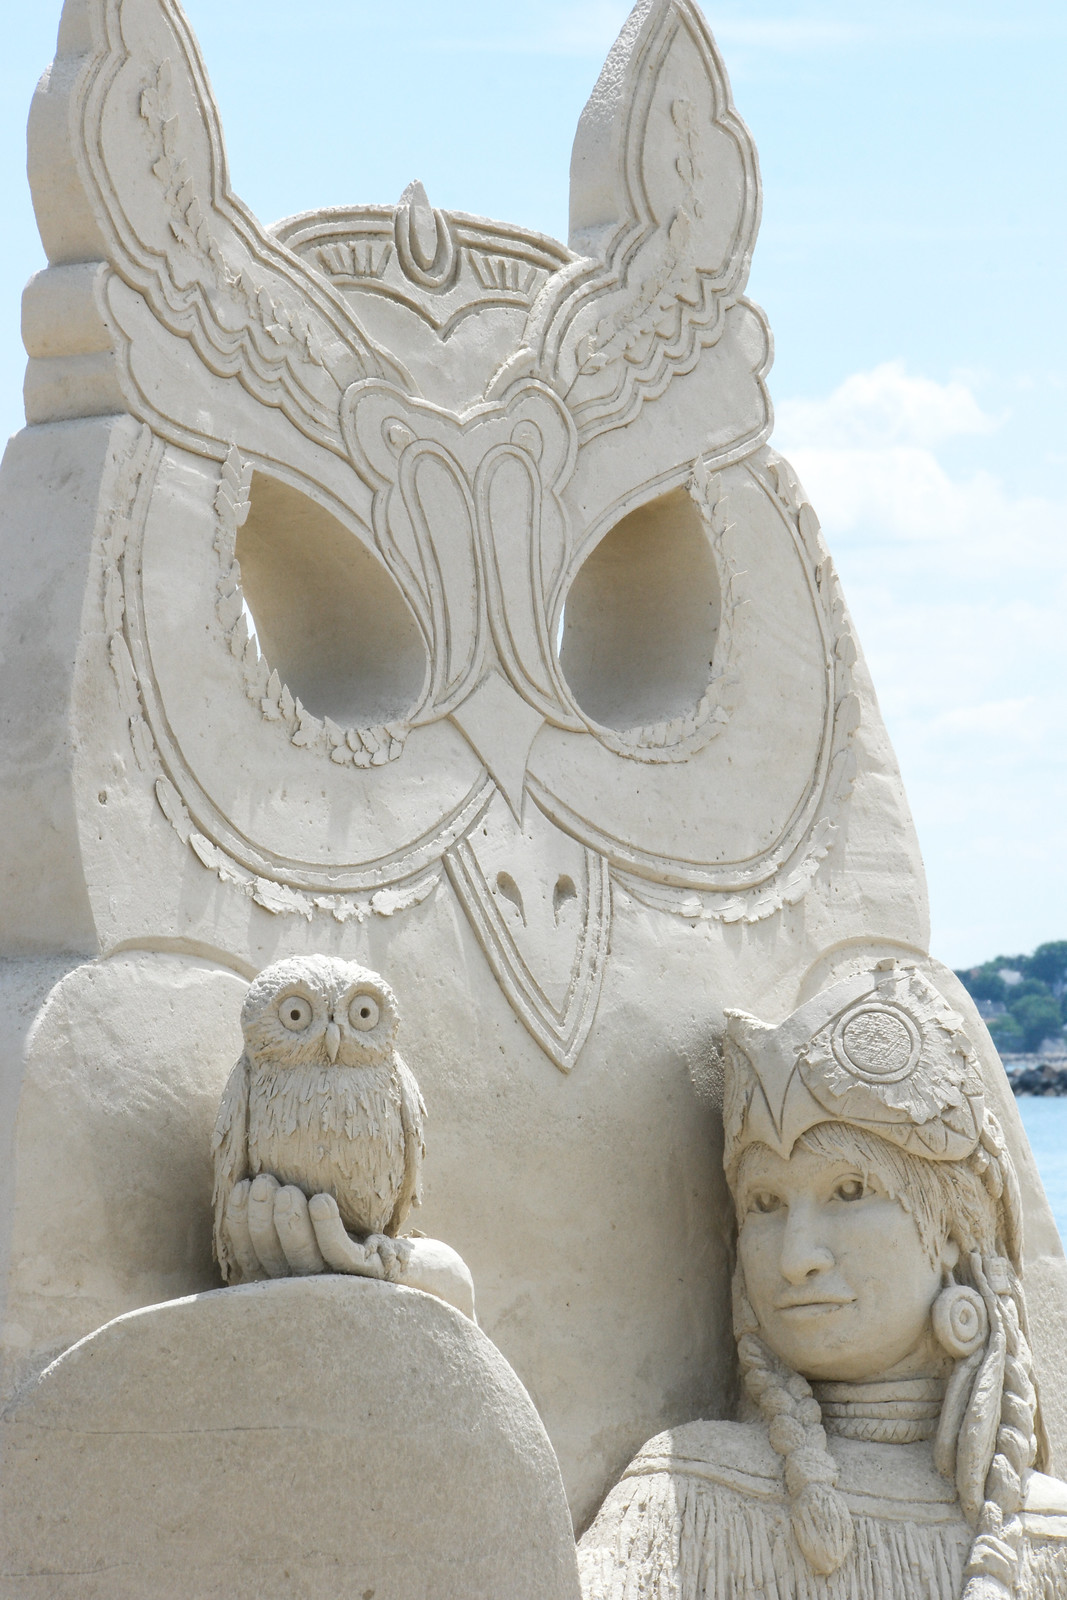 Revere Beach 2016 International Sand Sculpting FestivalInternational Sand Sculpting Festival